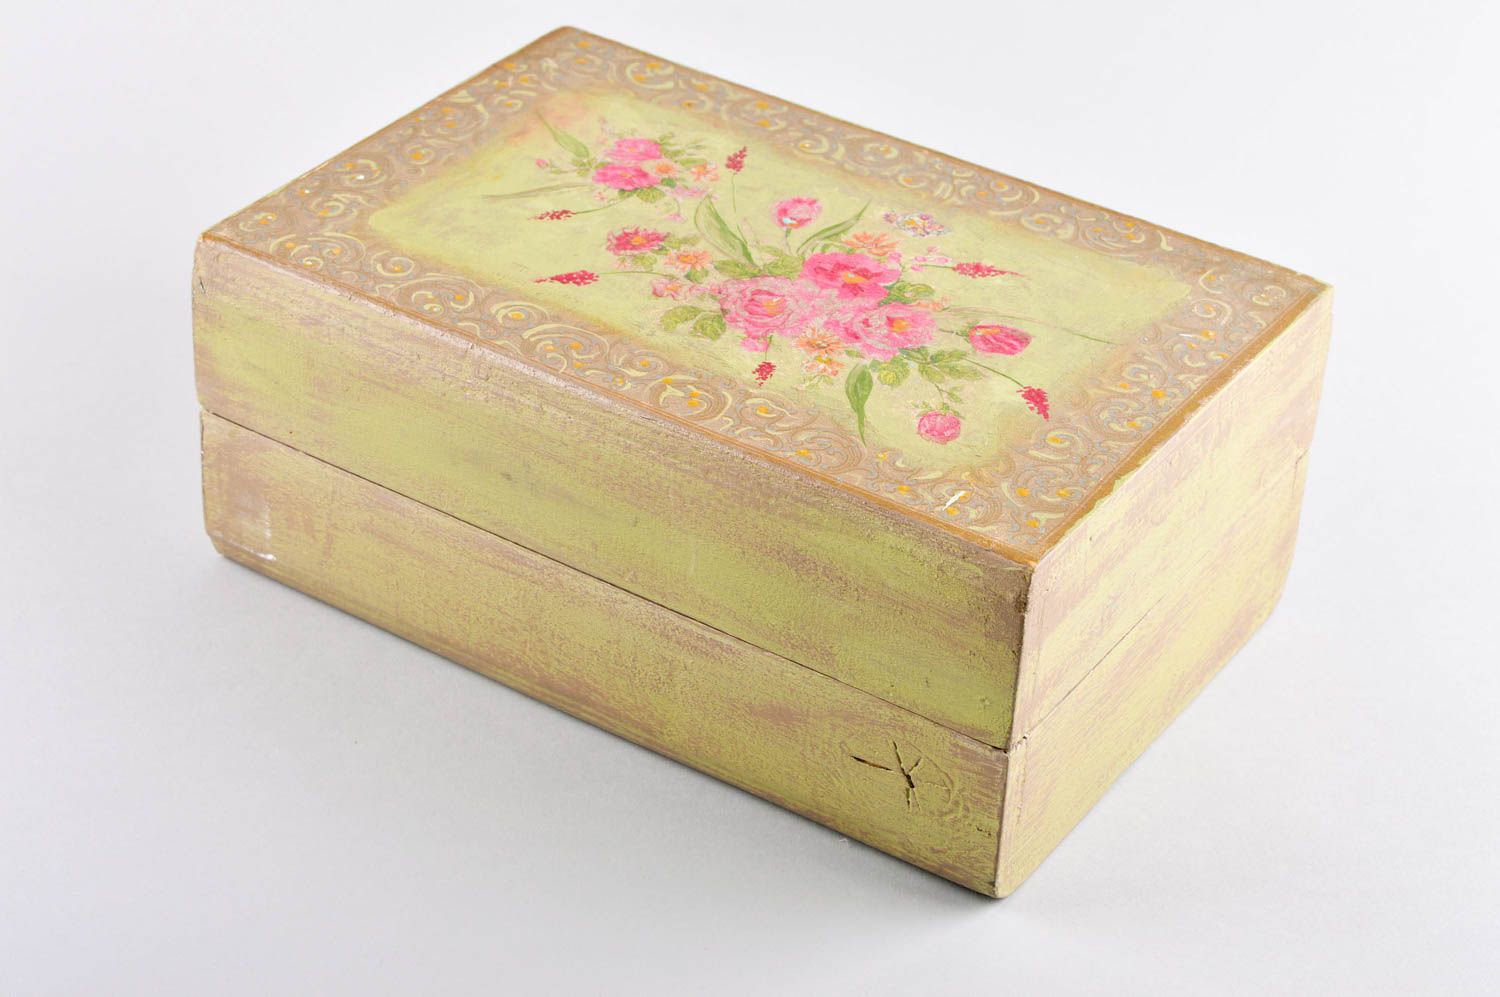 Beautiful handmade wooden box design jewelry box wood craft home decor ideas photo 2